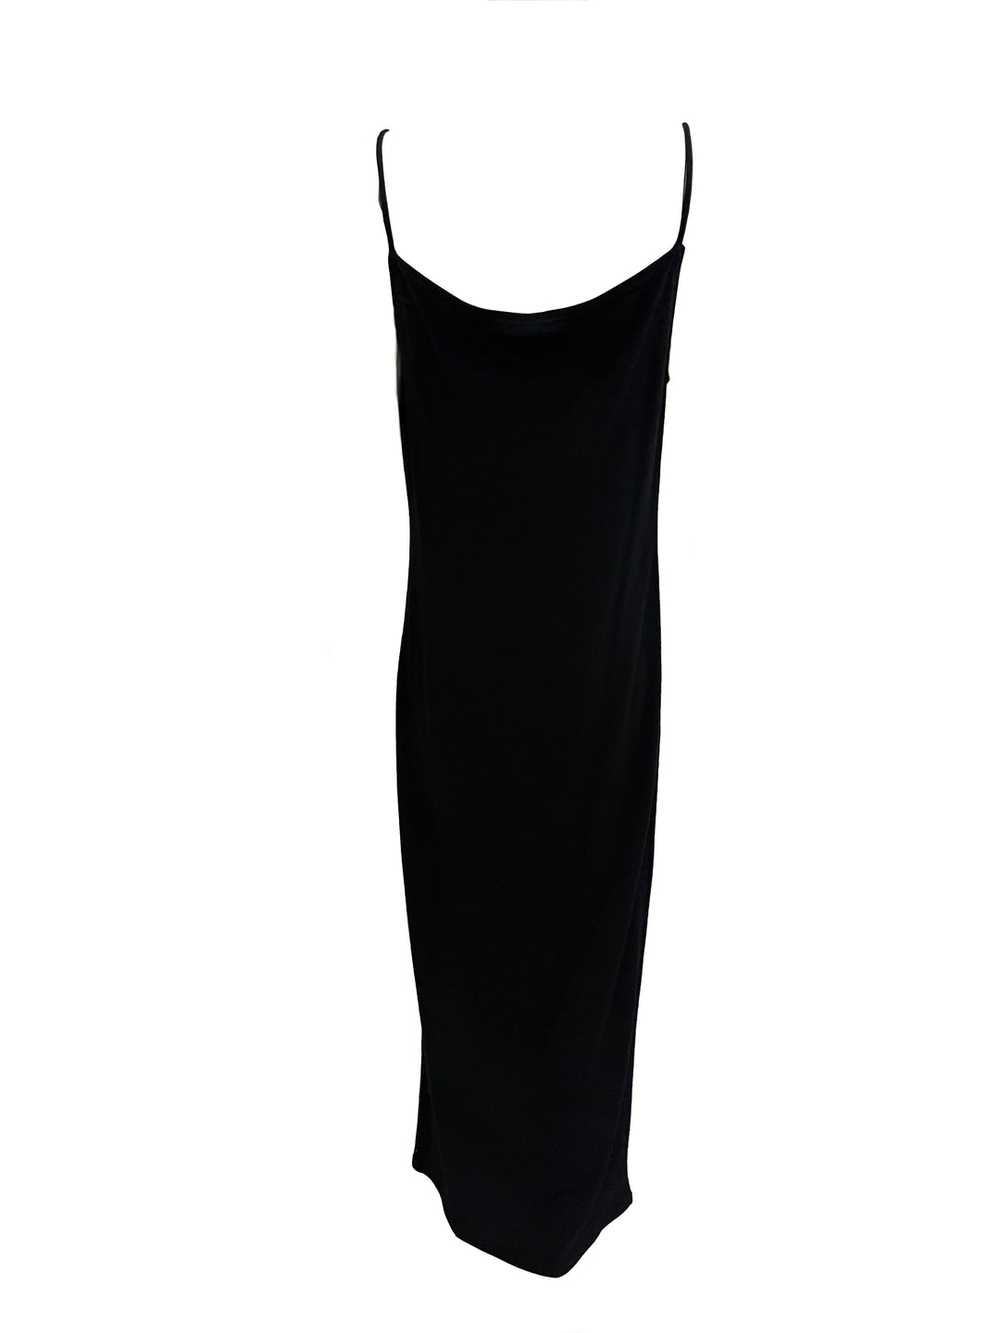 Krizia 90s Black Cashmere Slip Dress - image 1